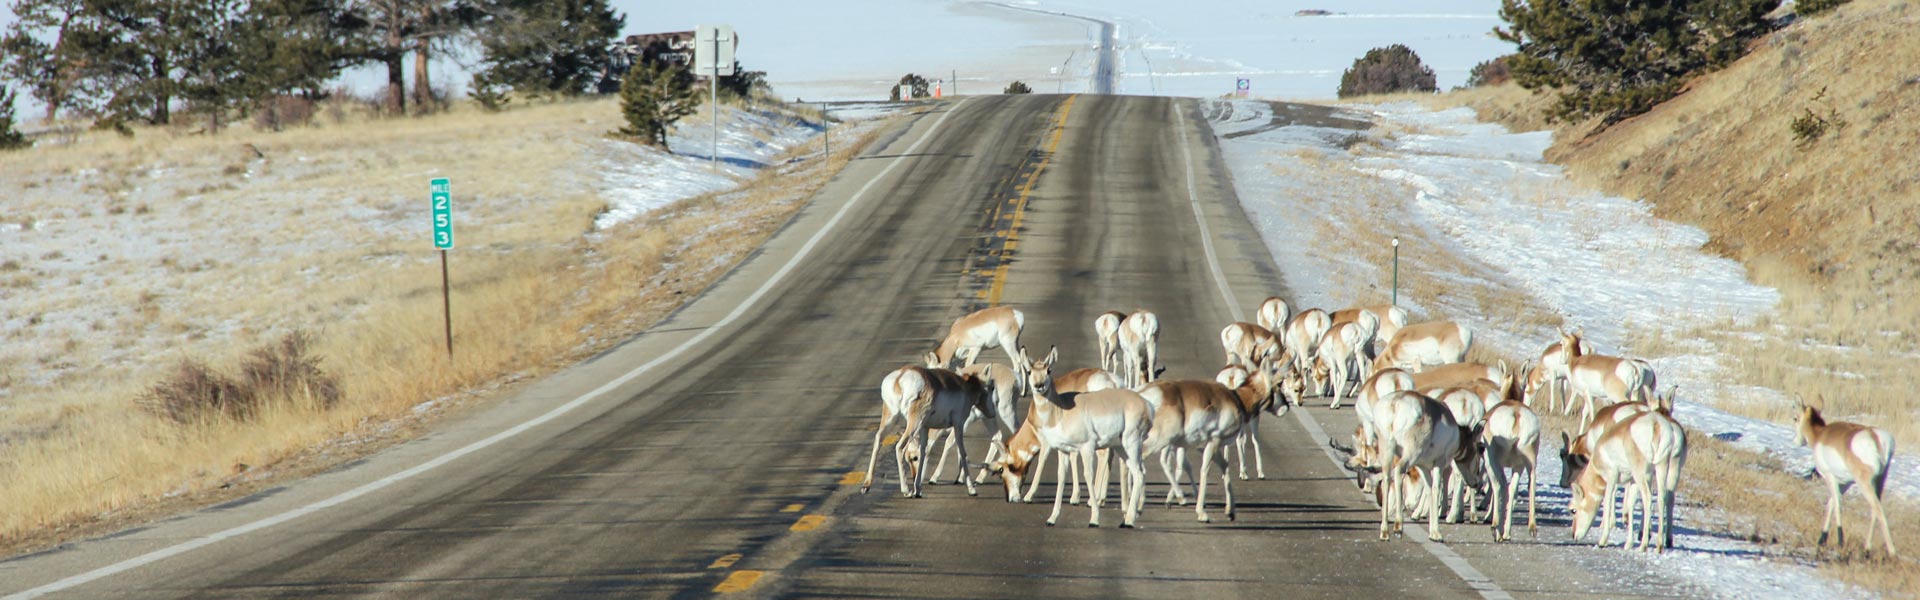 Antelope herd on highway